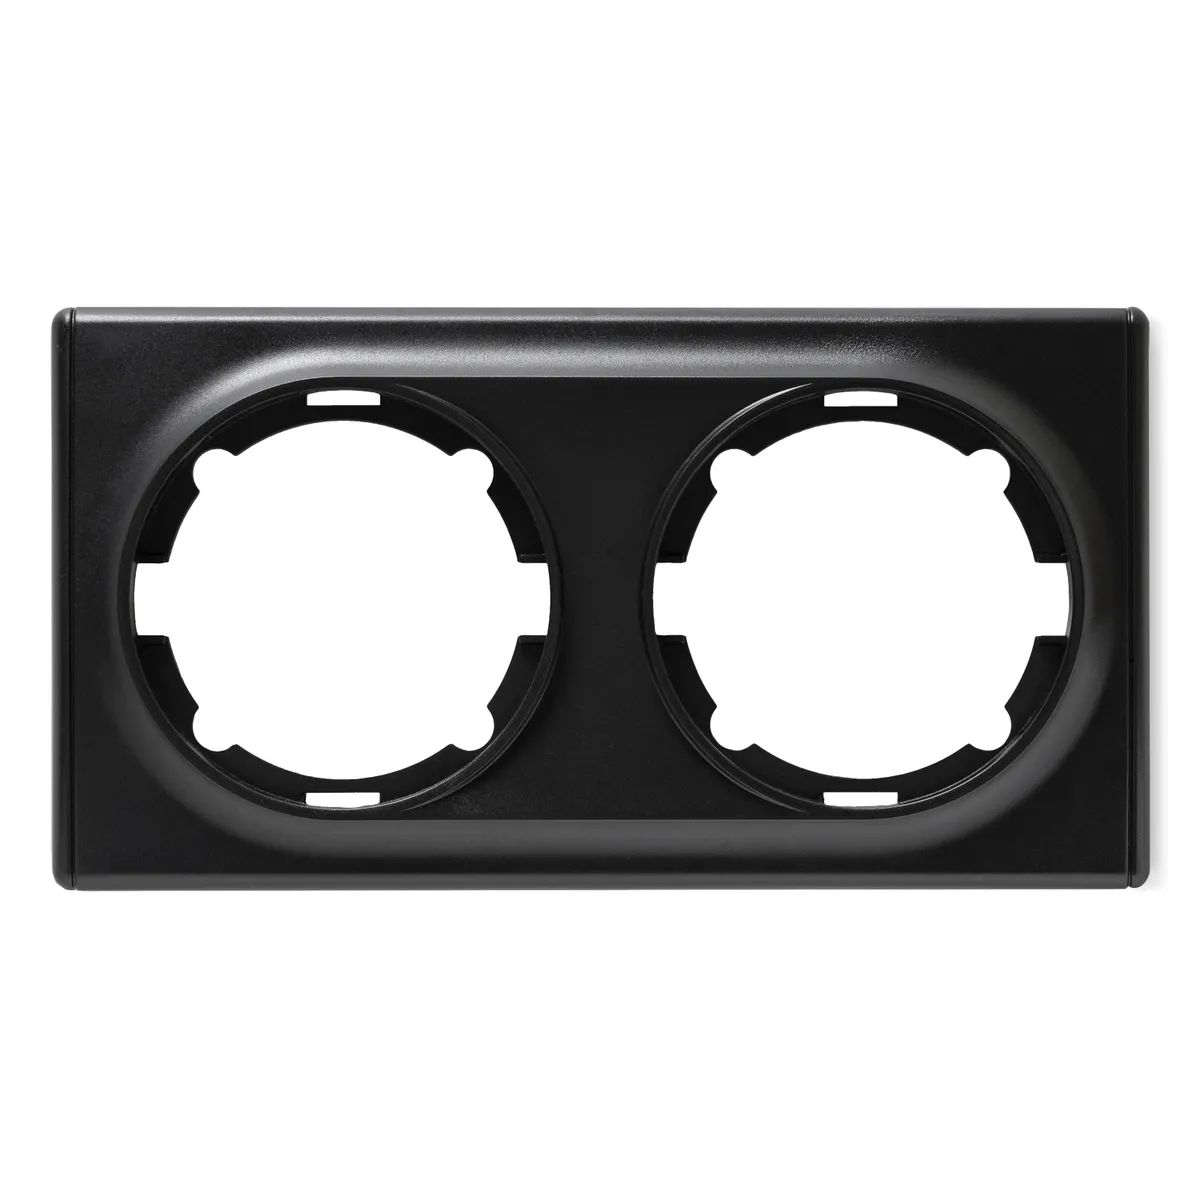 Рамка двойная OneKeyElectro (серия Florence), цвет черный вертикальная двойная адаптерная рамка для настенных блоков lanmaster